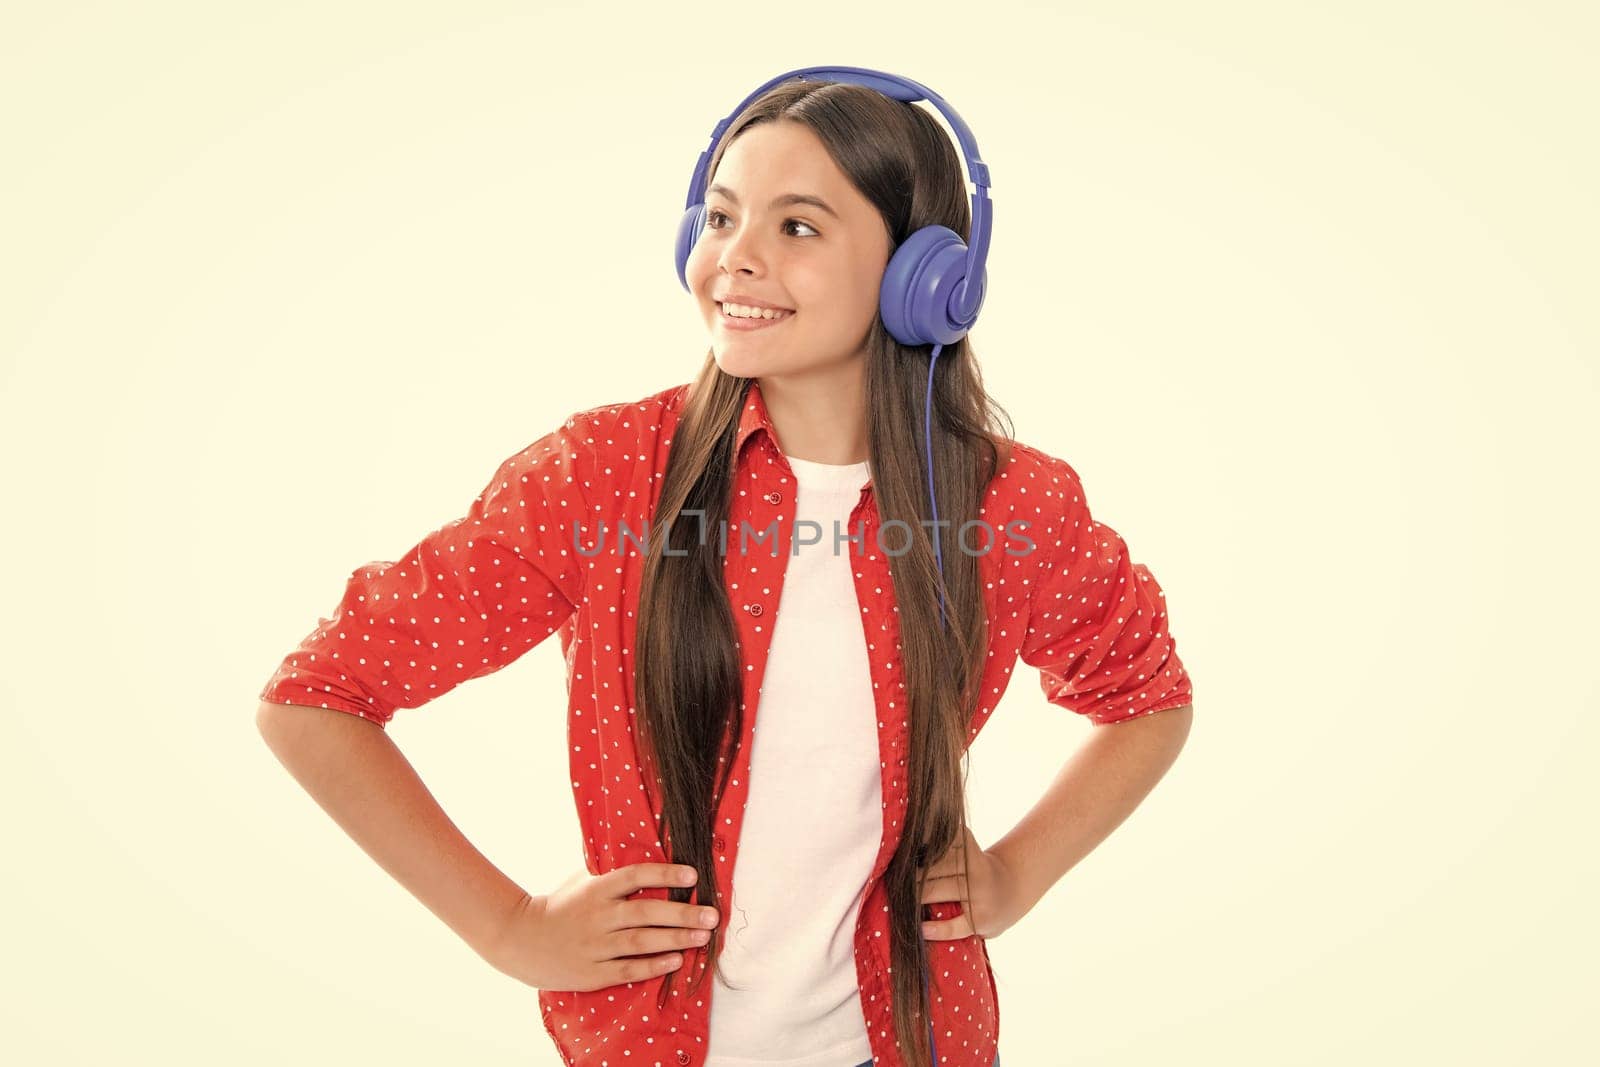 Funny kid girl 12, 13, 14 years old listen music with headphones. Teenage girl with headphones listening songs on headset earphone. Portrait of happy smiling teenage child girl